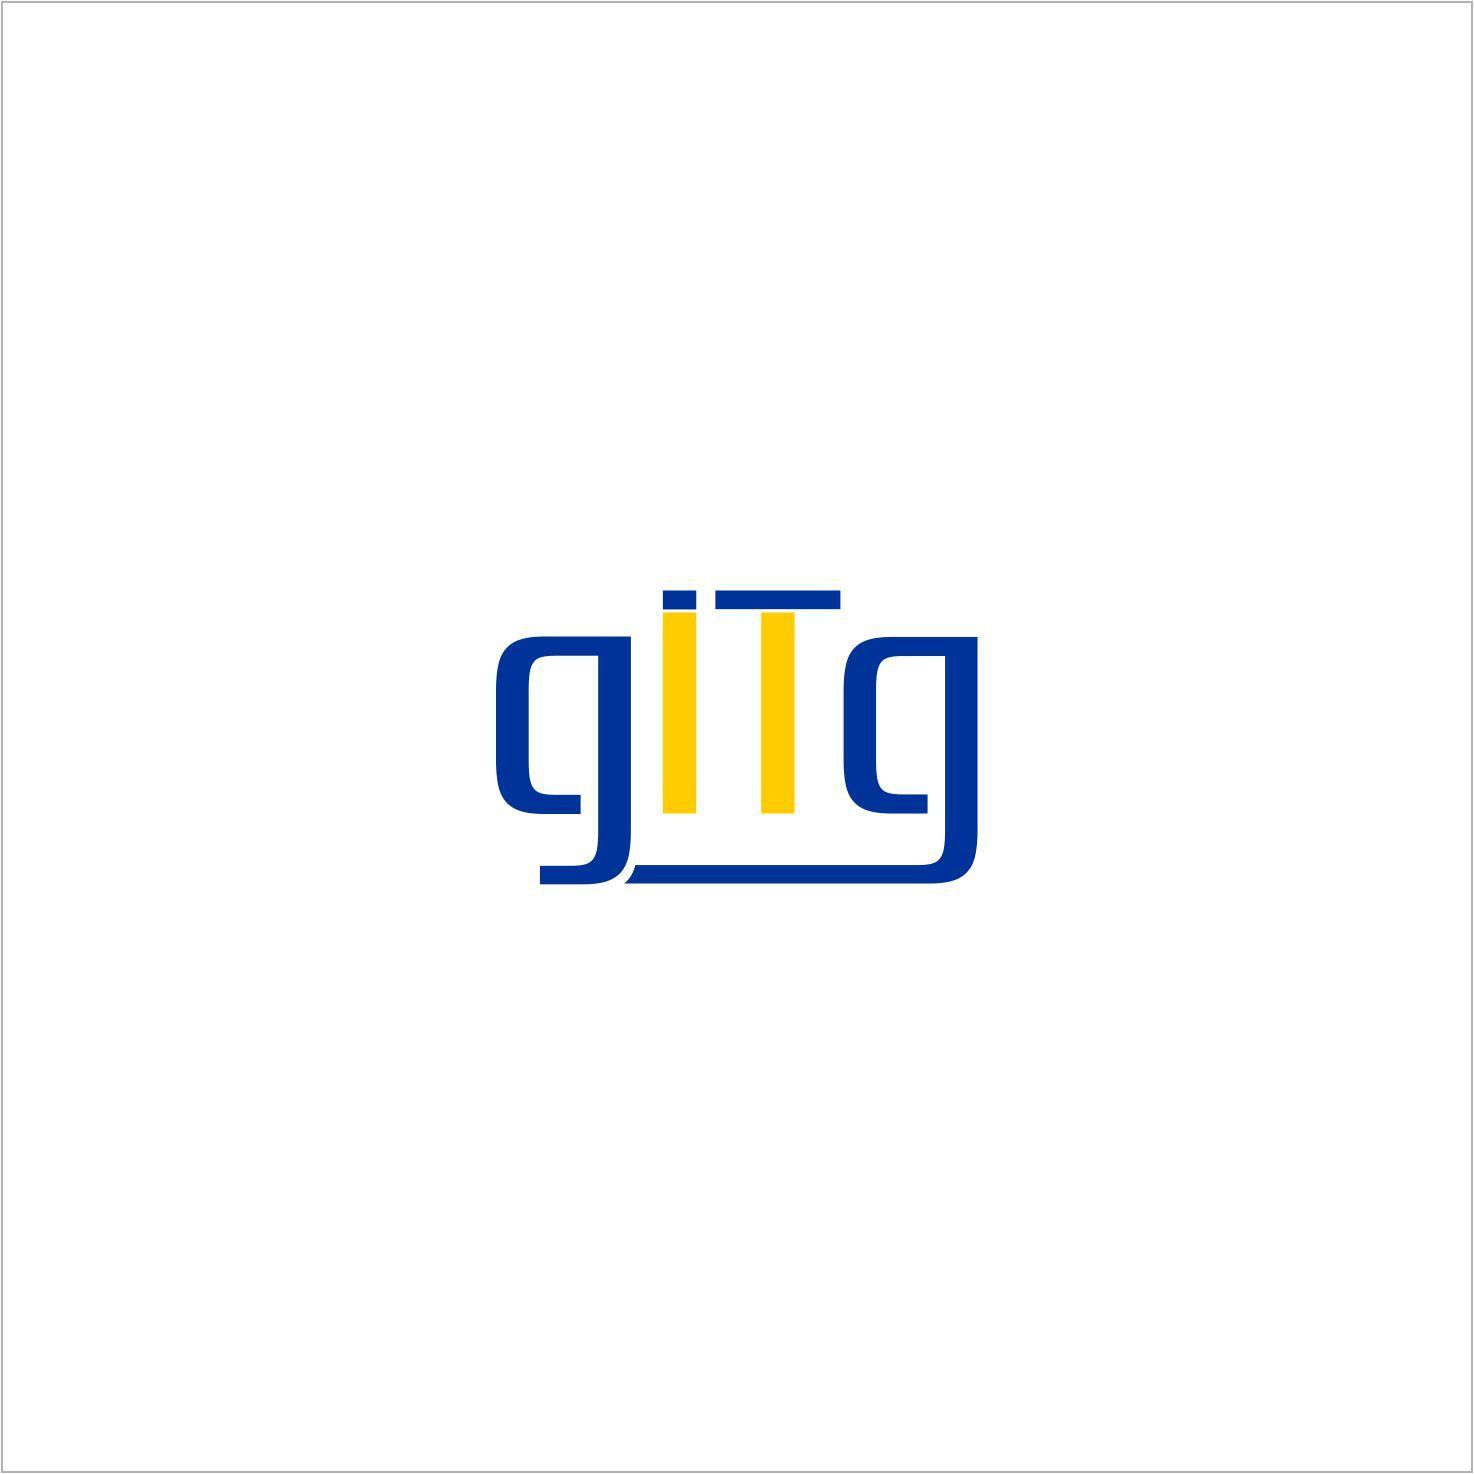 Square Bold G Logo - Bold, Masculine, Information Technology Logo Design for Examples